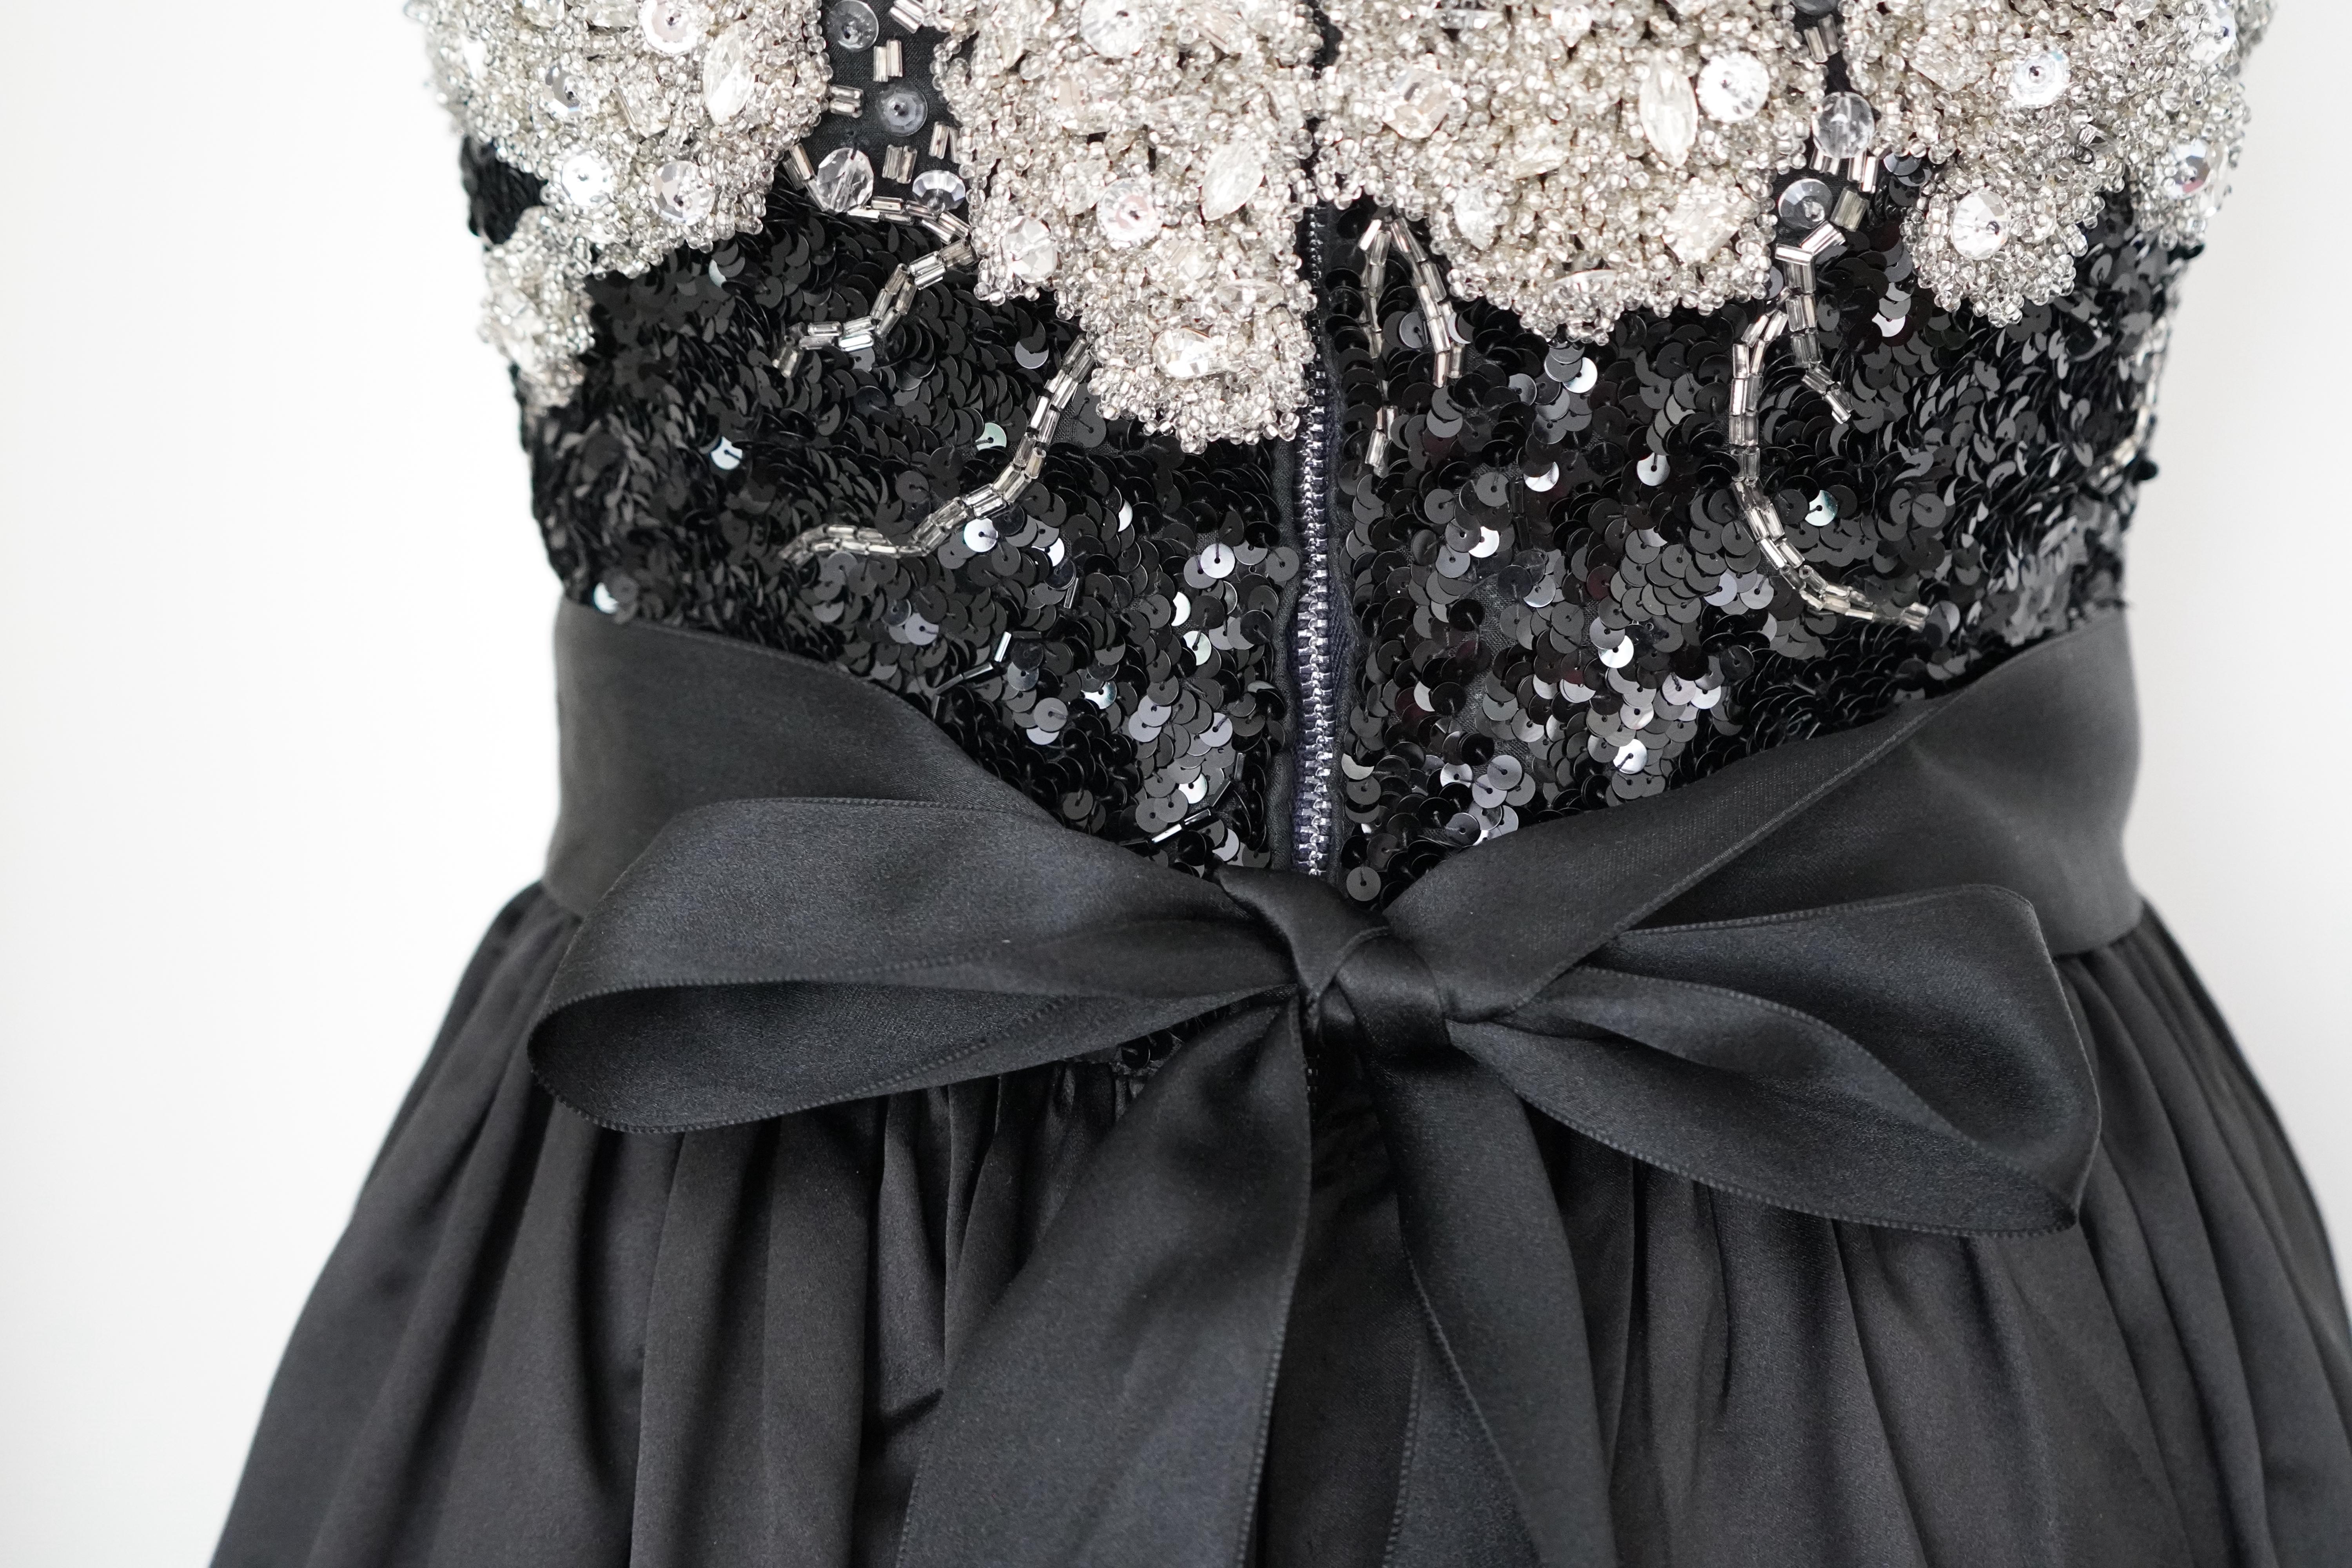 Vintage OSCAR DE LA RENTA Black Silk & Swarovski Maxi Evening Dress Gown Size 8 For Sale 1